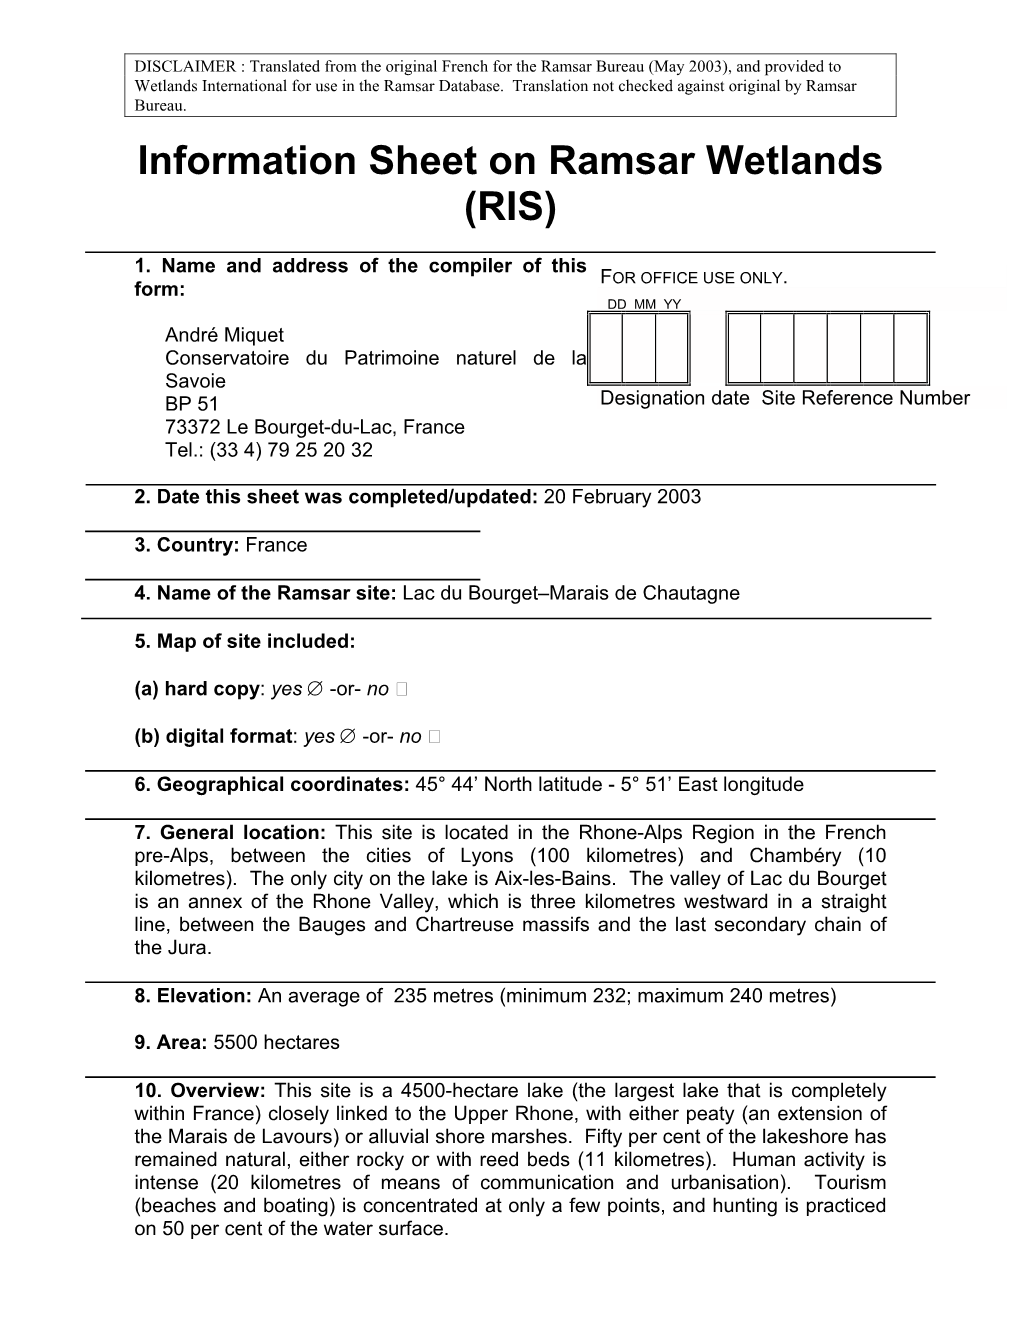 Information Sheet on Ramsar Wetlands (RIS)